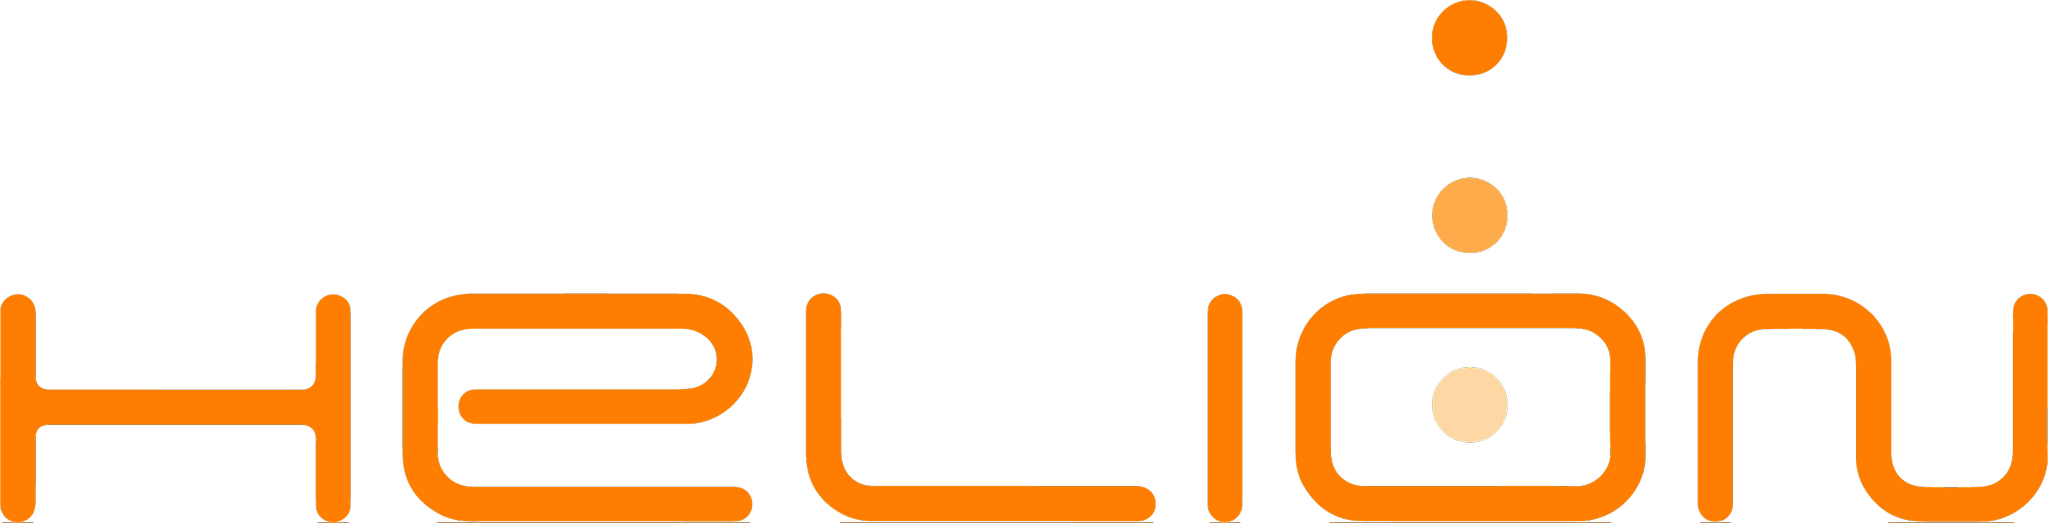 helion_logo